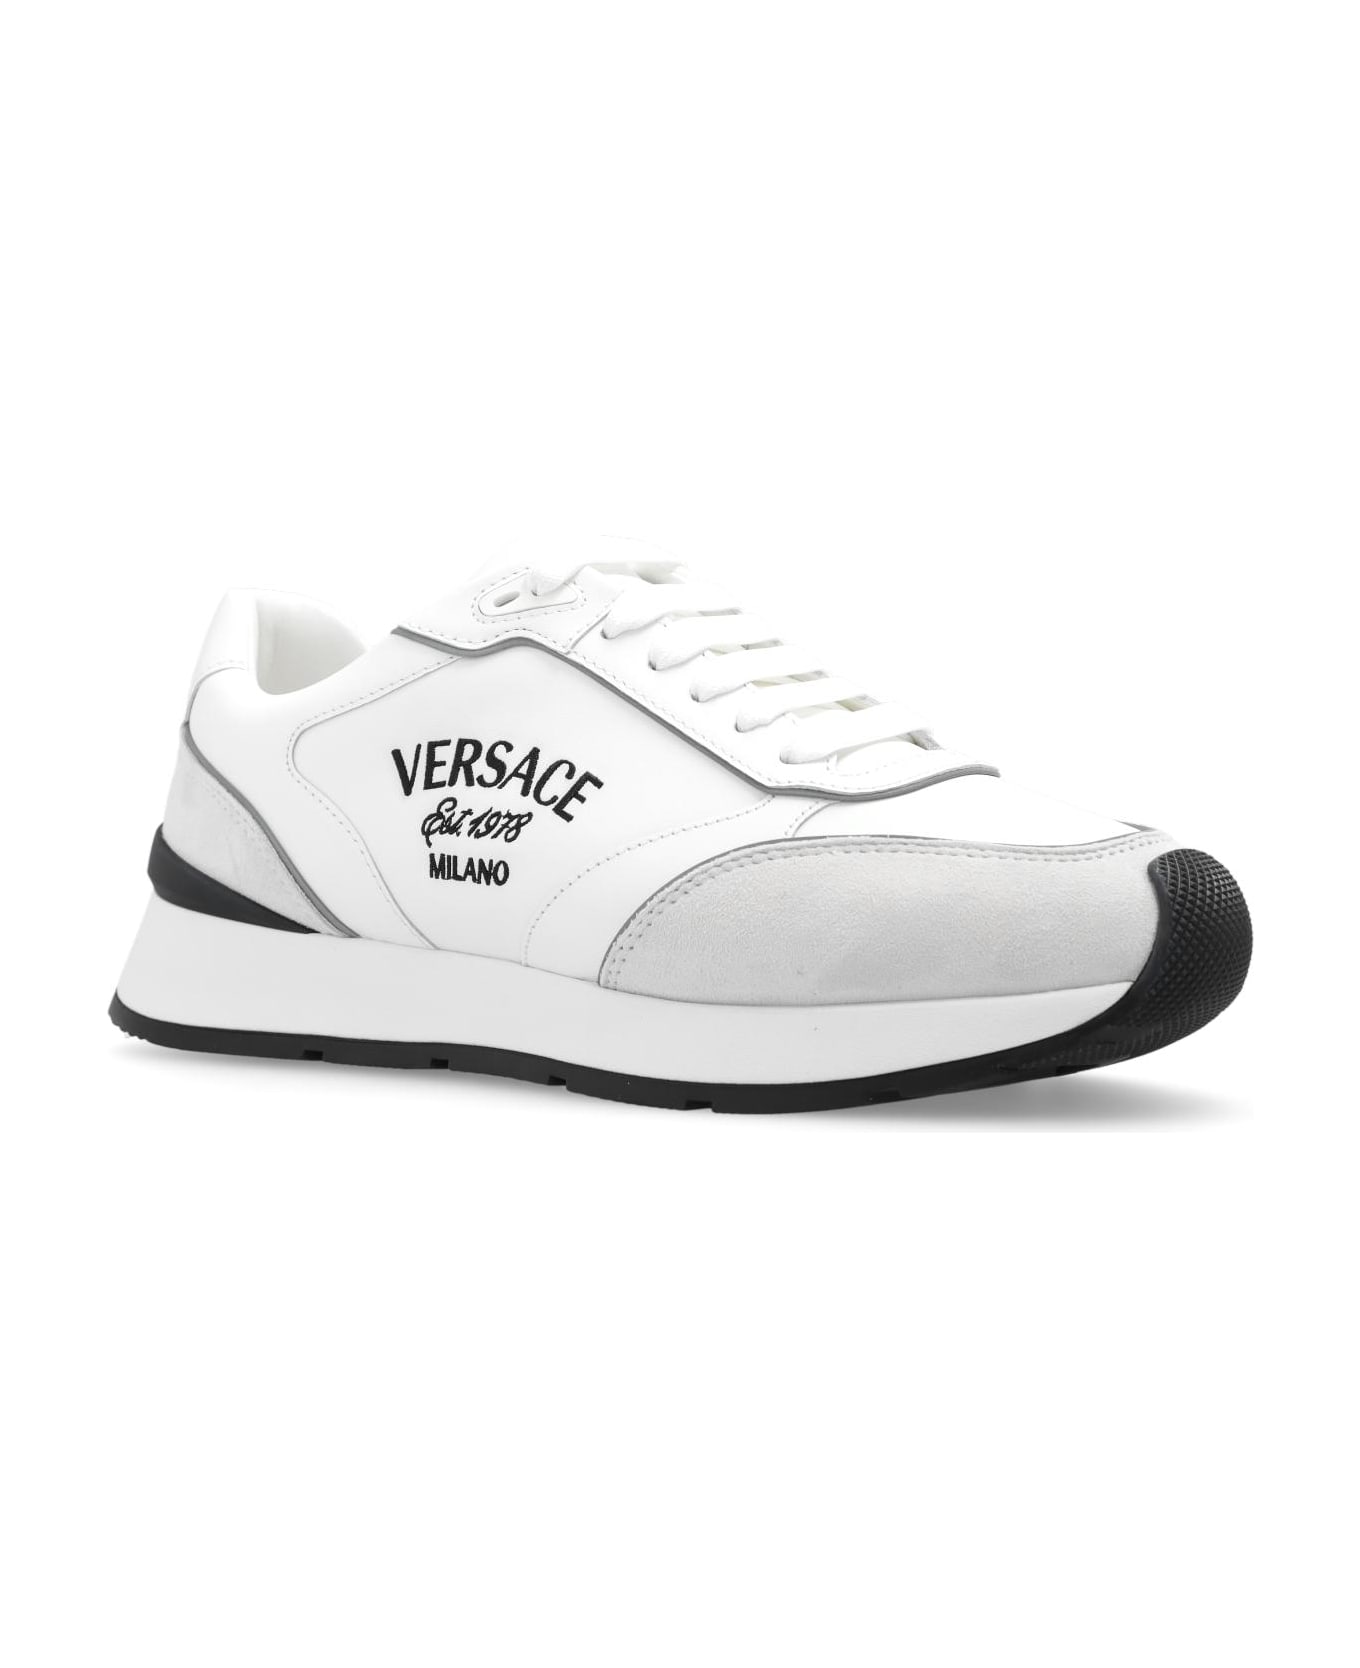 Versace 'milano' Sneakers - Bianco スニーカー